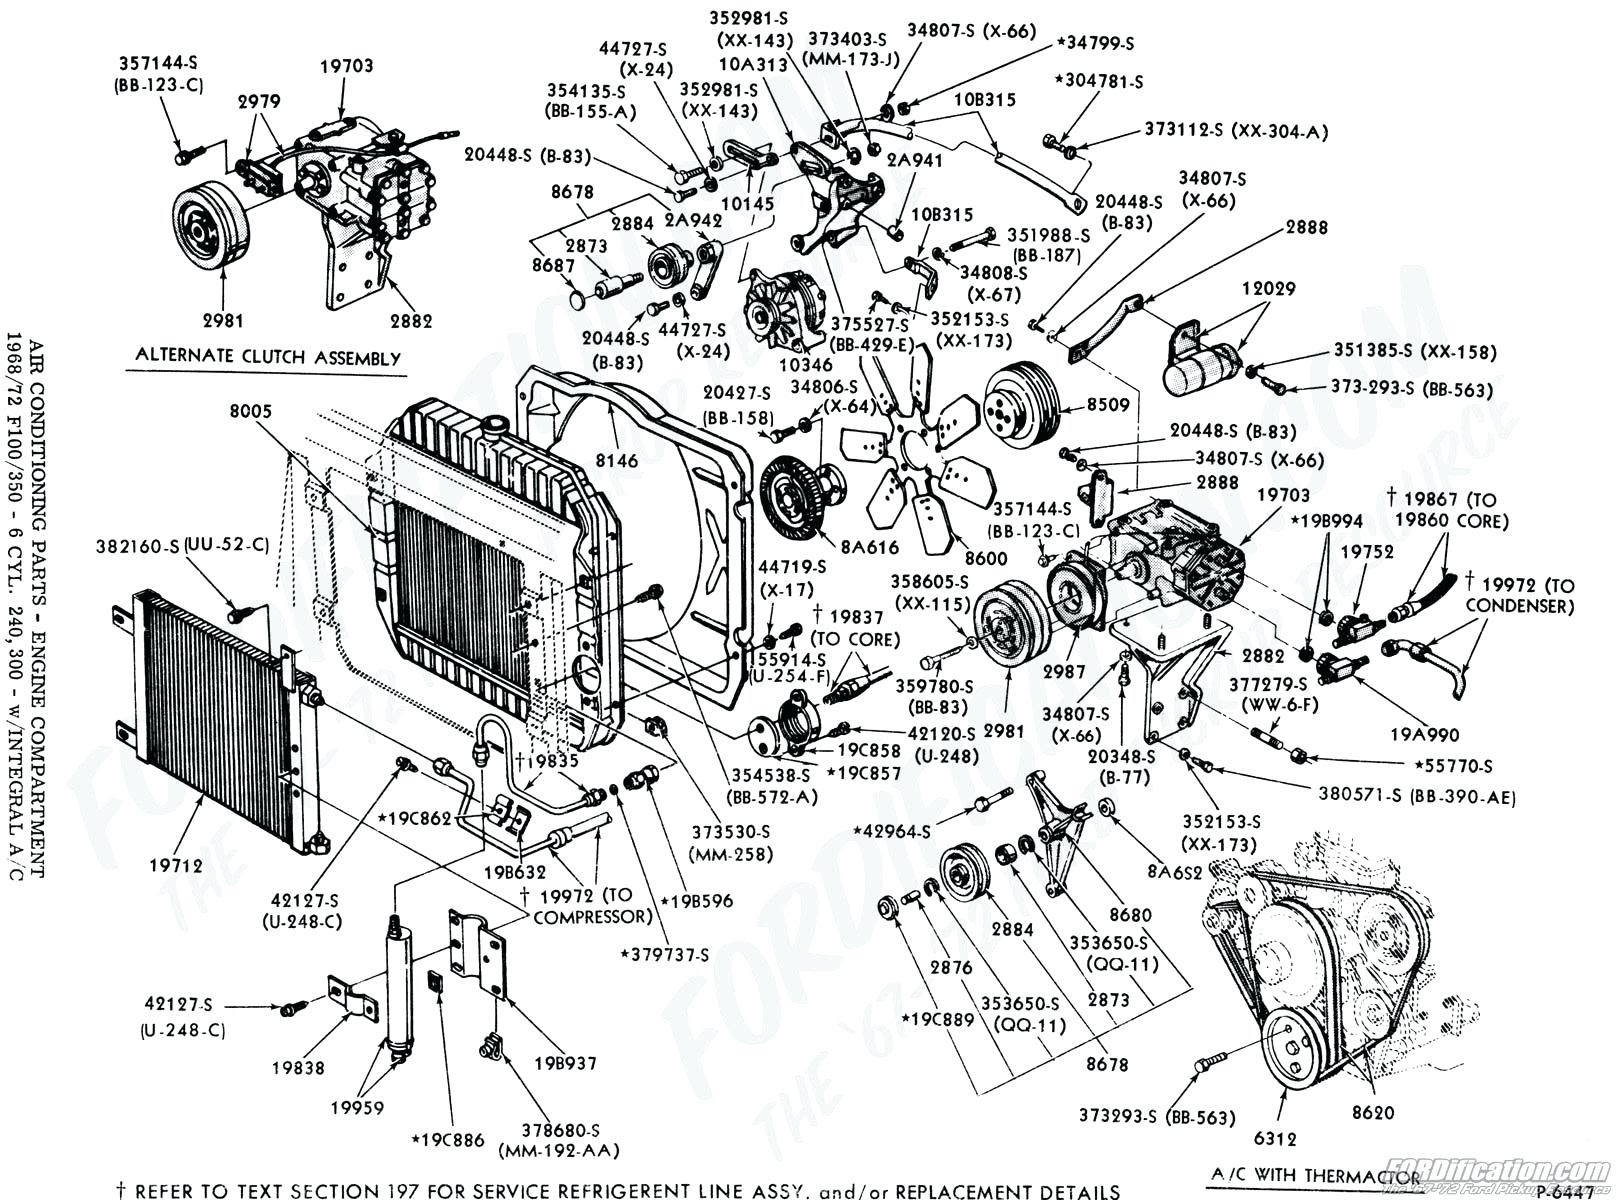 Ford 302 Engine Diagram